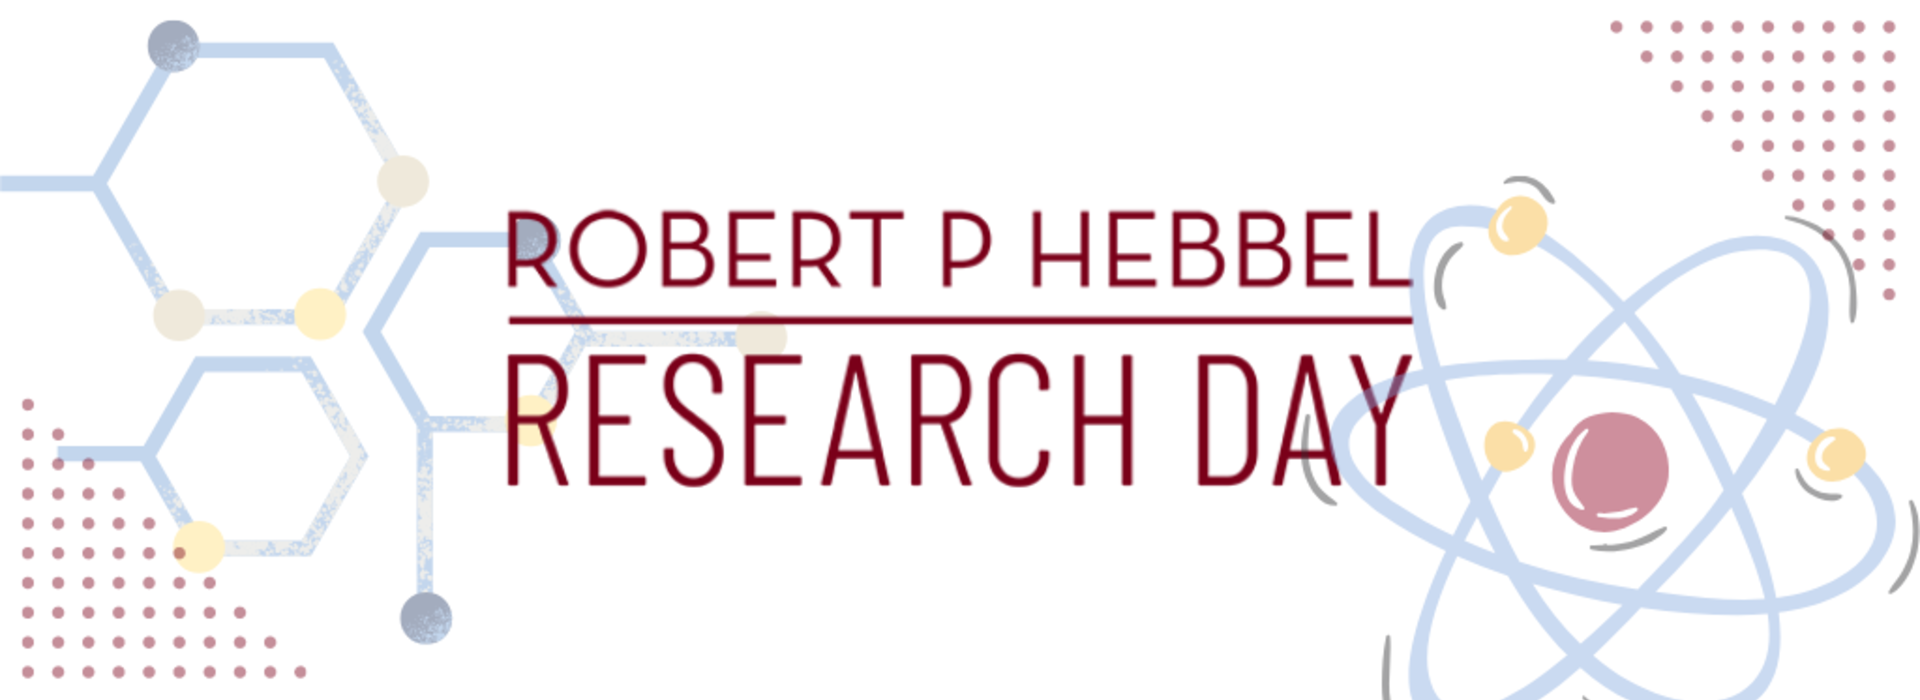 hebbel research days